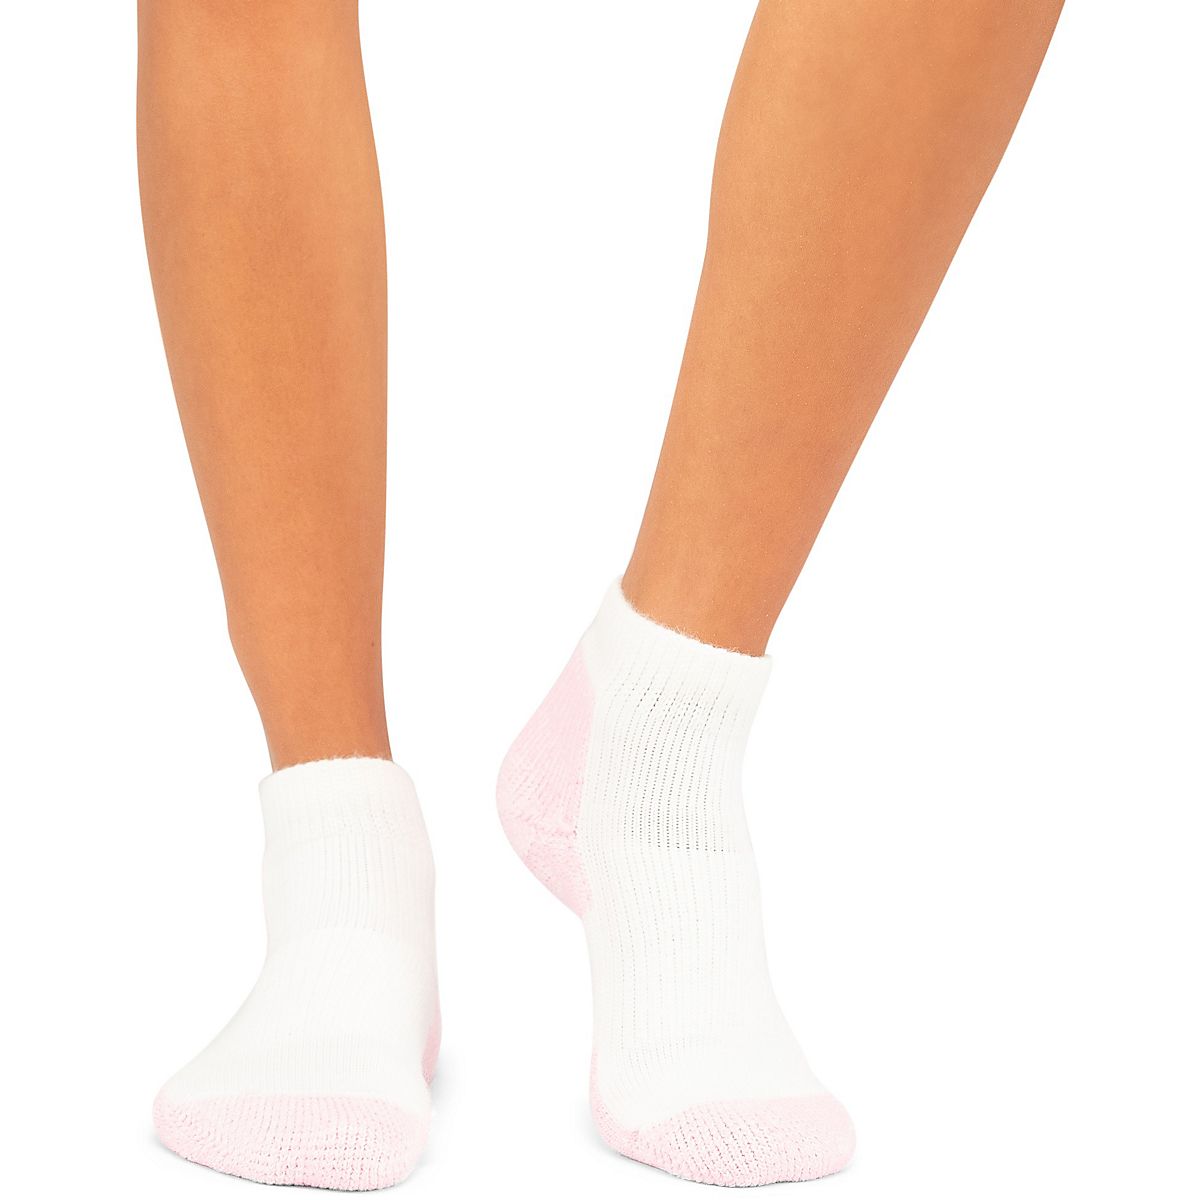 Thorlos Walking Maximum Cushion Low Cut Socks | Academy